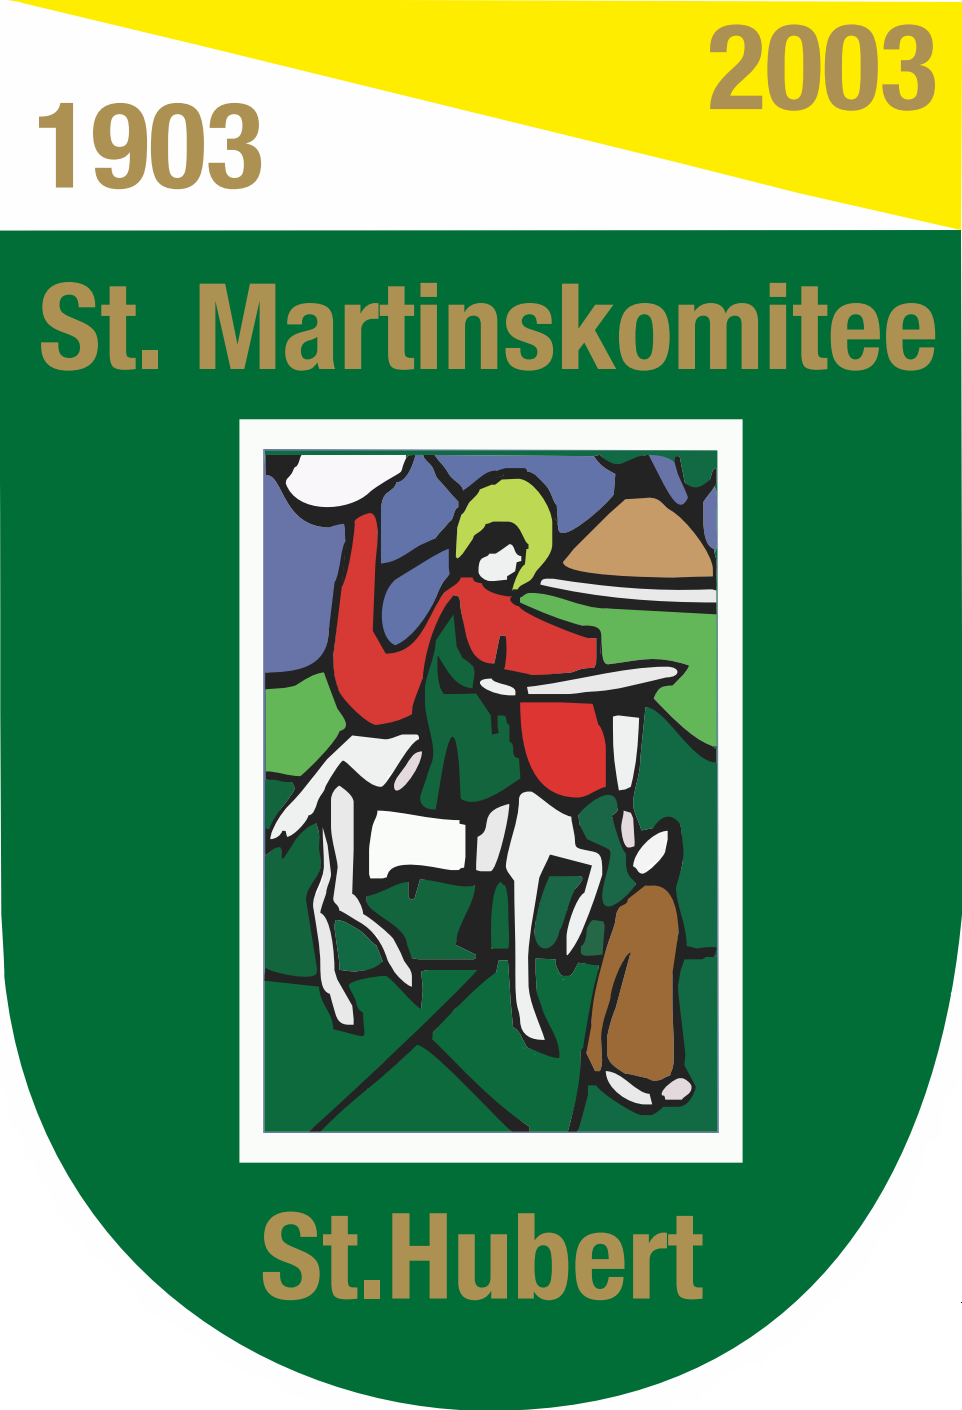 St. Martinskomitee St. Hubert e.V.